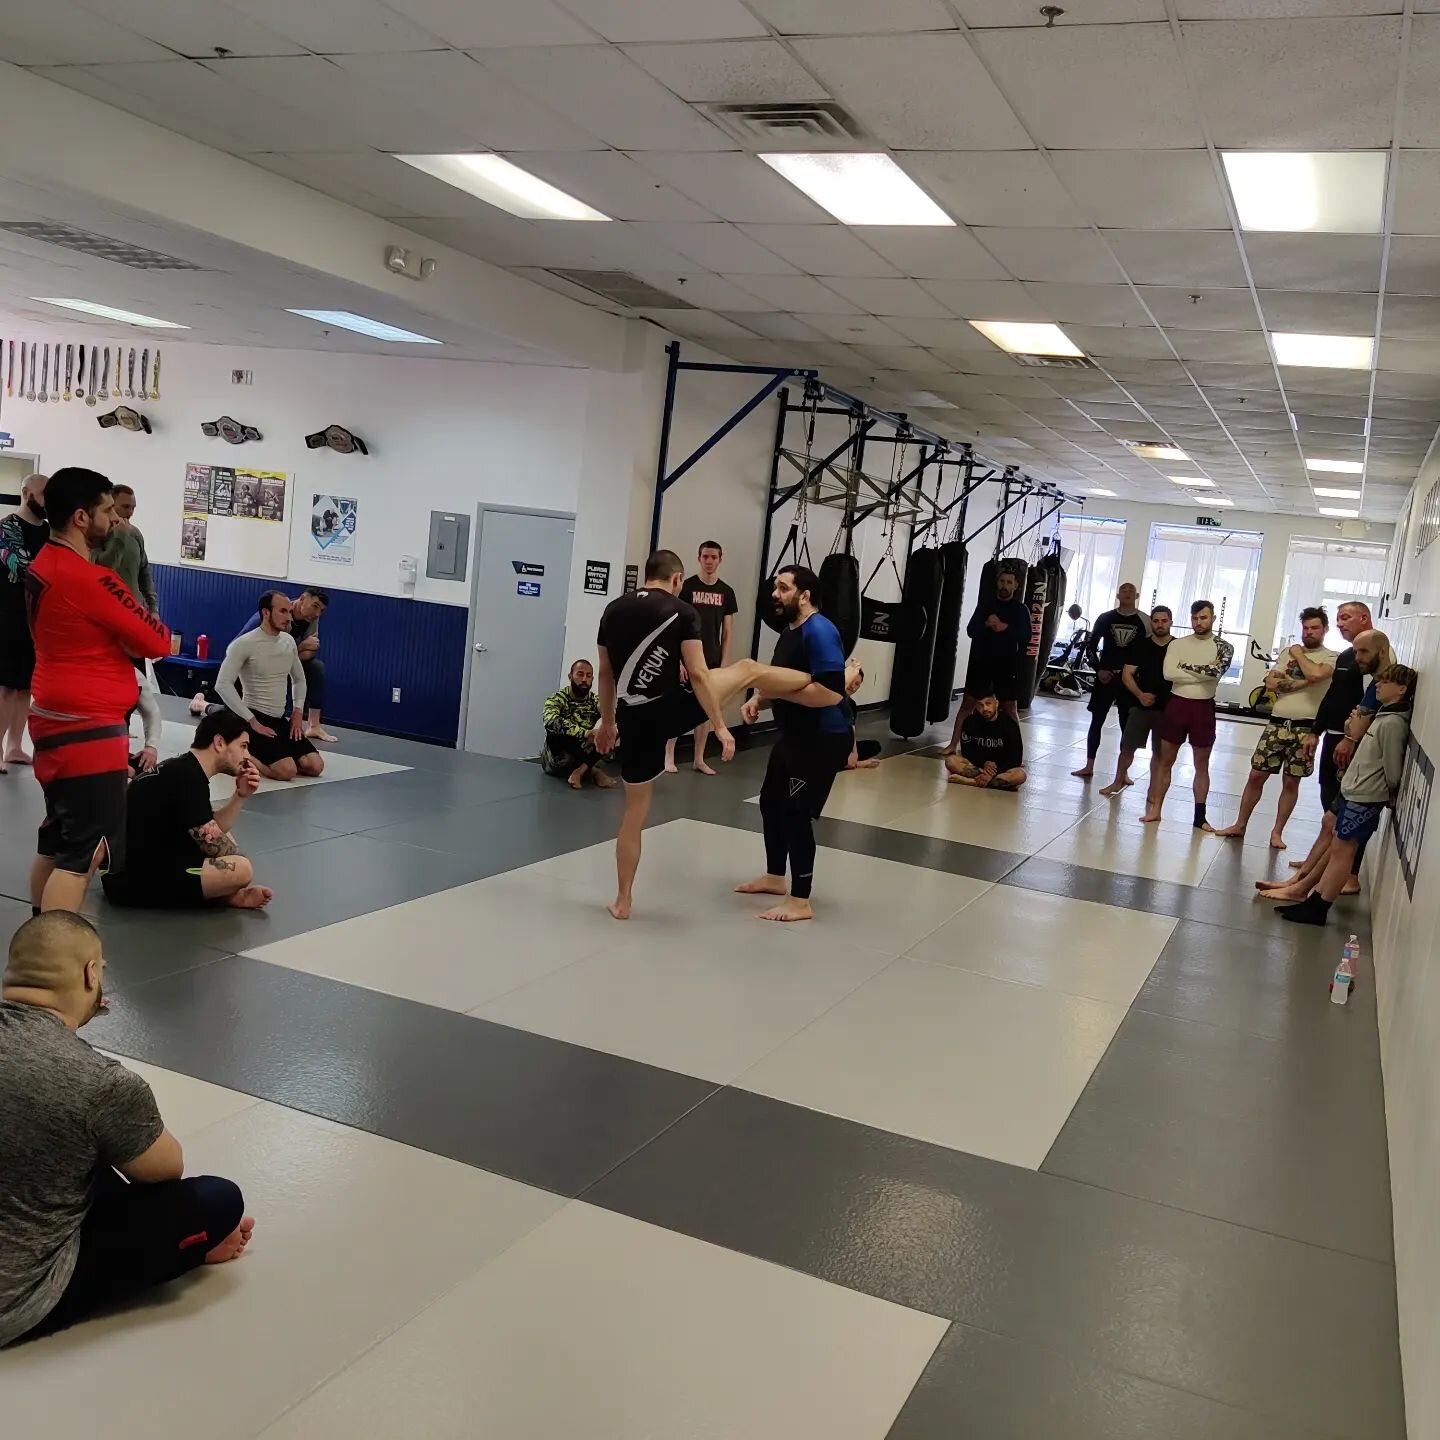 Saturday Jiu Jitsu! Great to see a packed room.